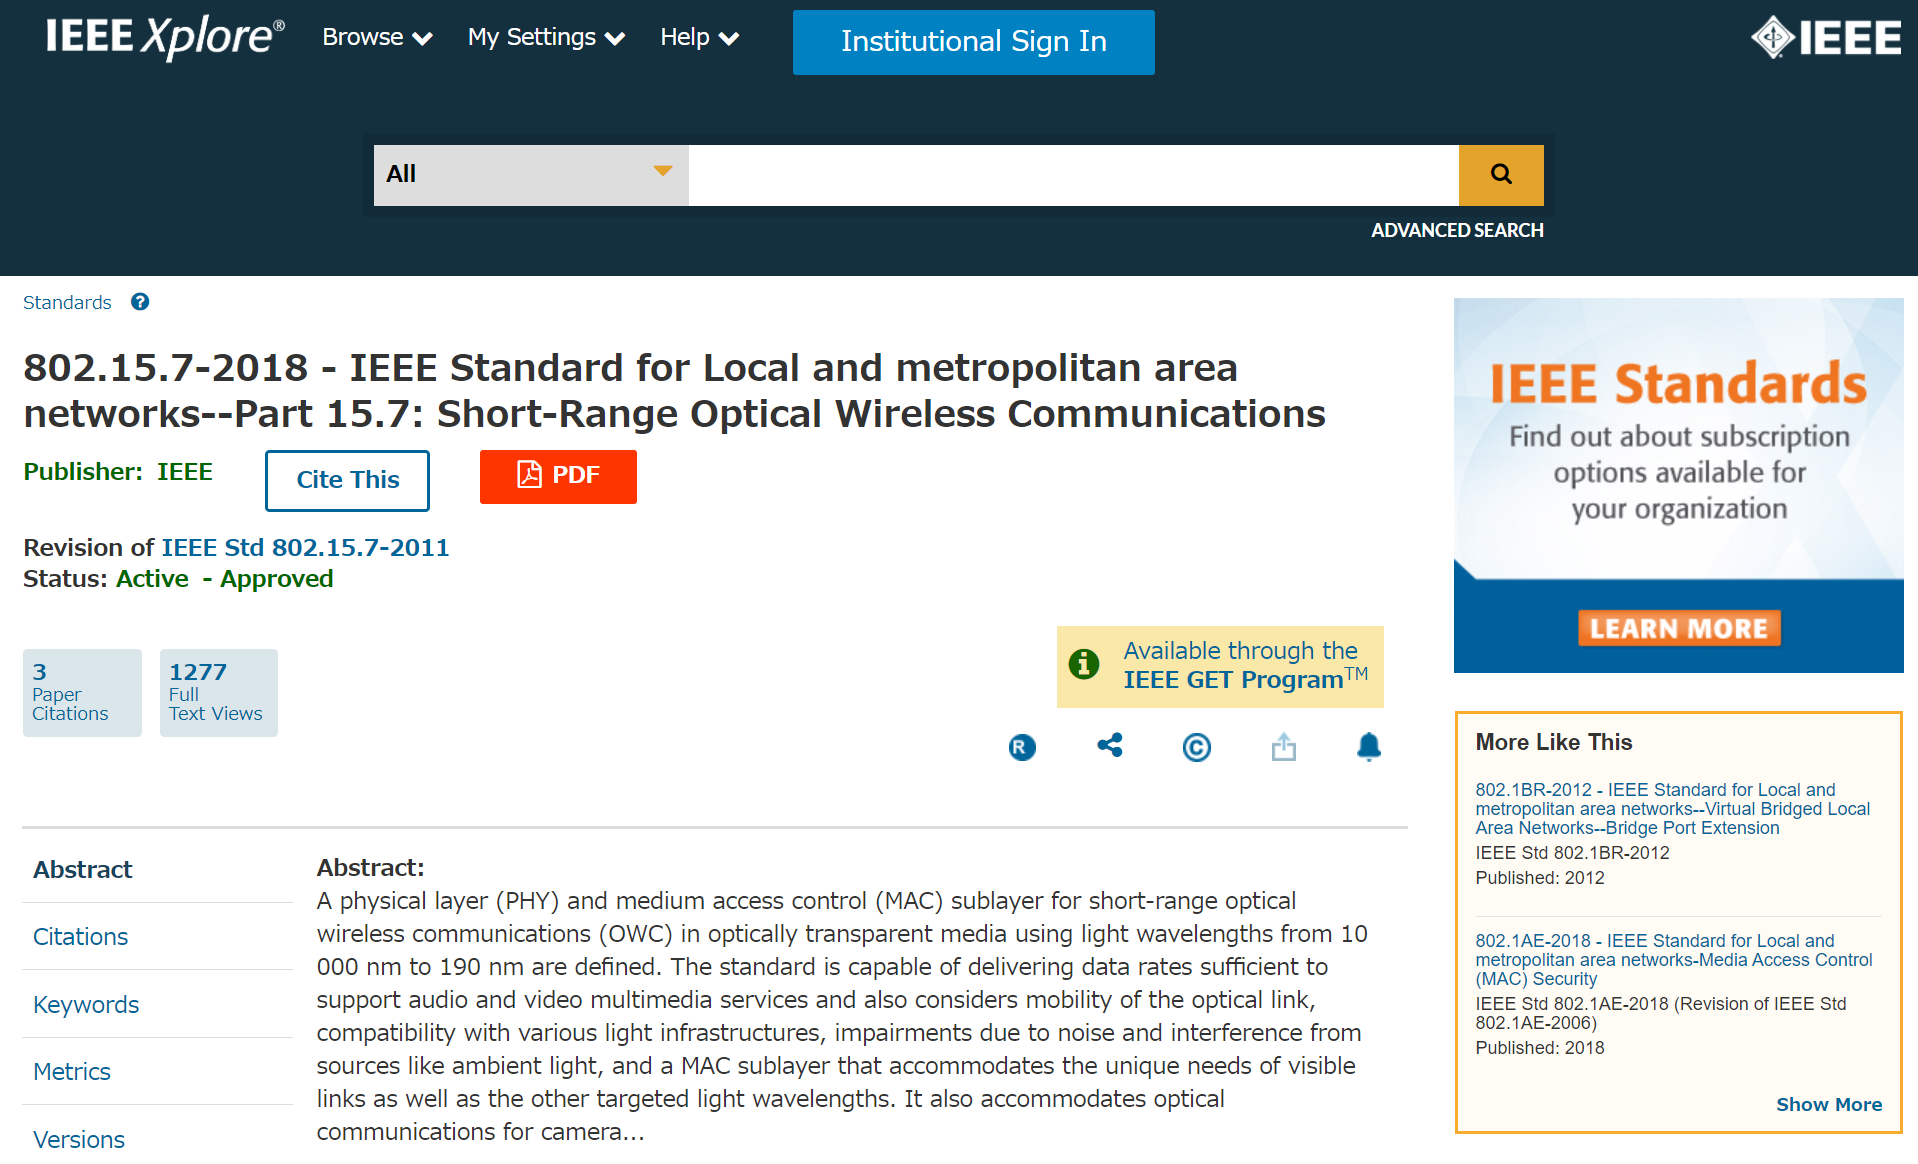 IEEE Standard 802.15.7-2018